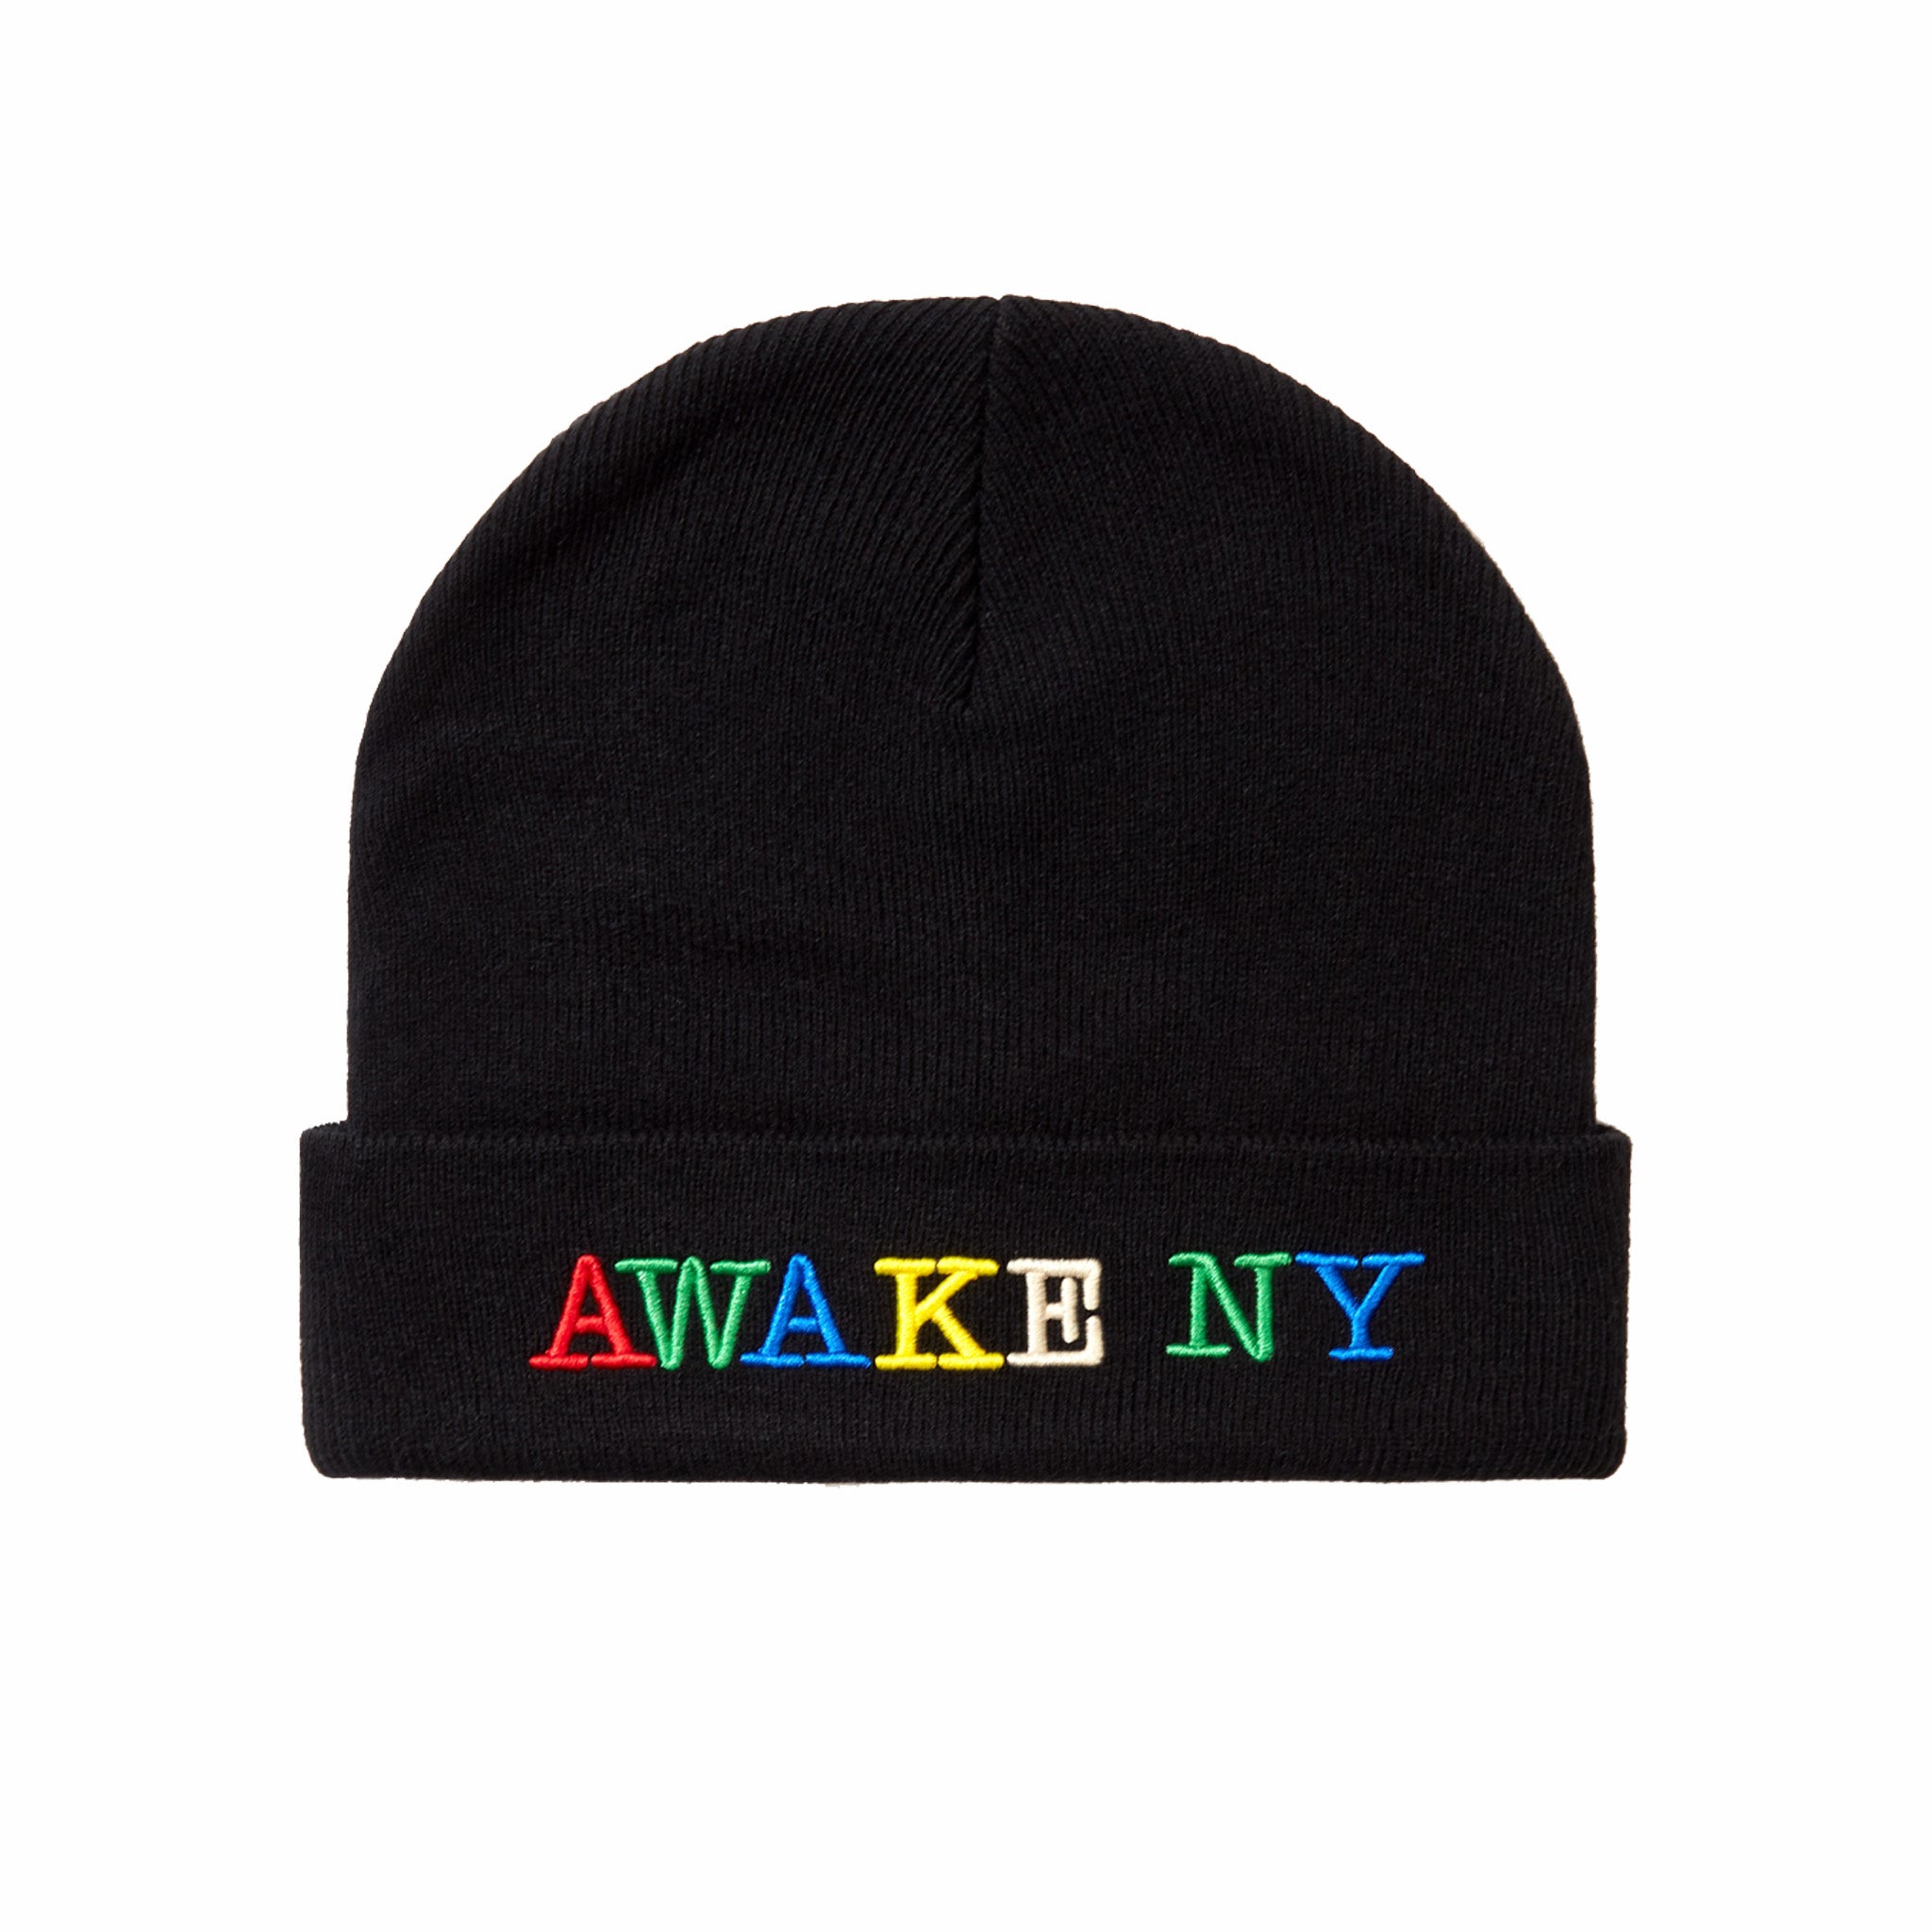 Awake NY x Peanuts Embroidered Beanie (Black) - August Shop